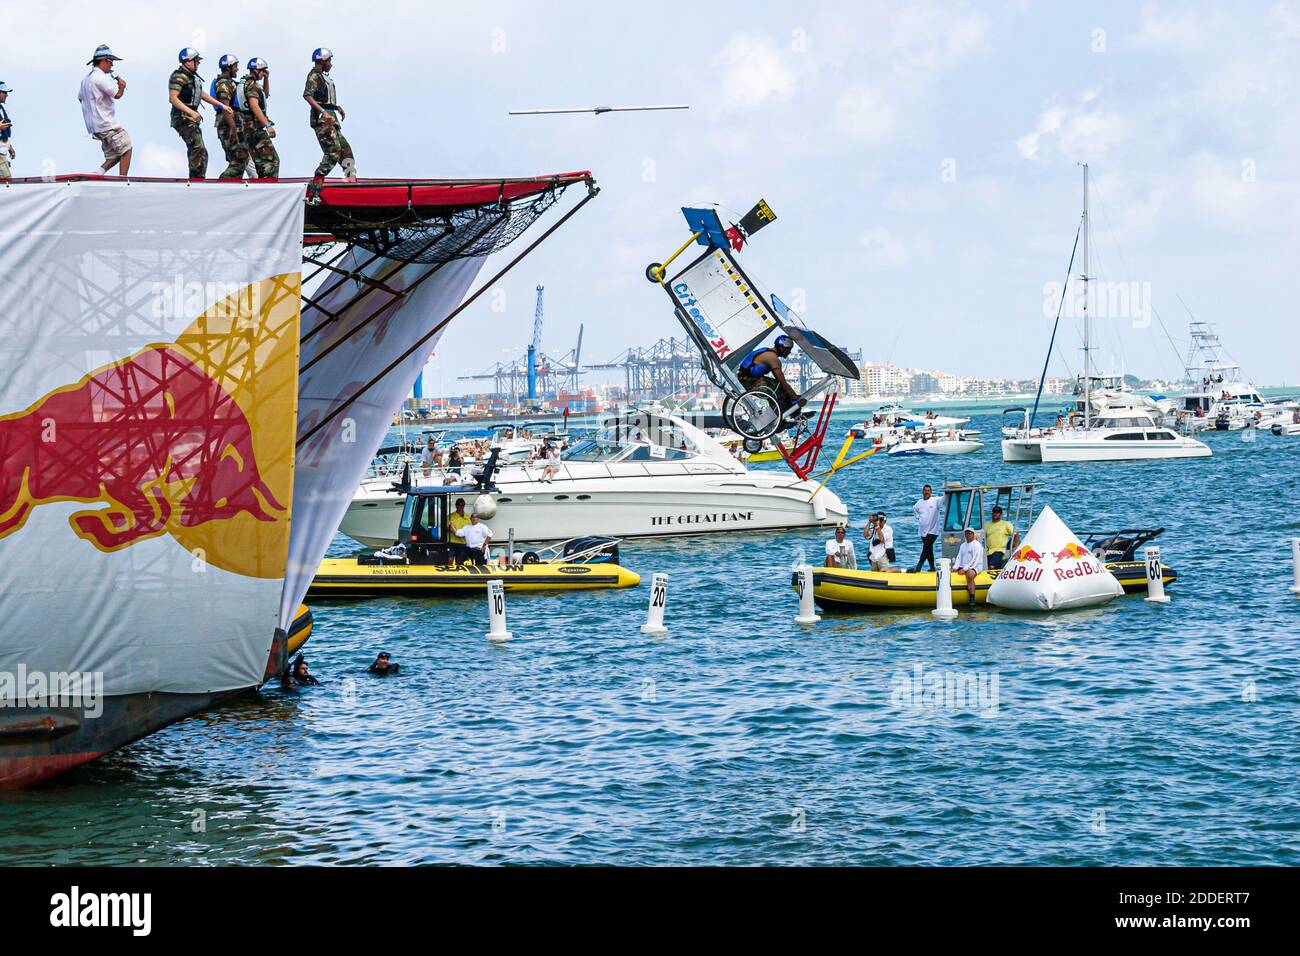 Miami Florida,Bayfront Park Red Bull Flugtag,festival evento whimsical vuelo de lucha competencia Biscayne Bay, Foto de stock